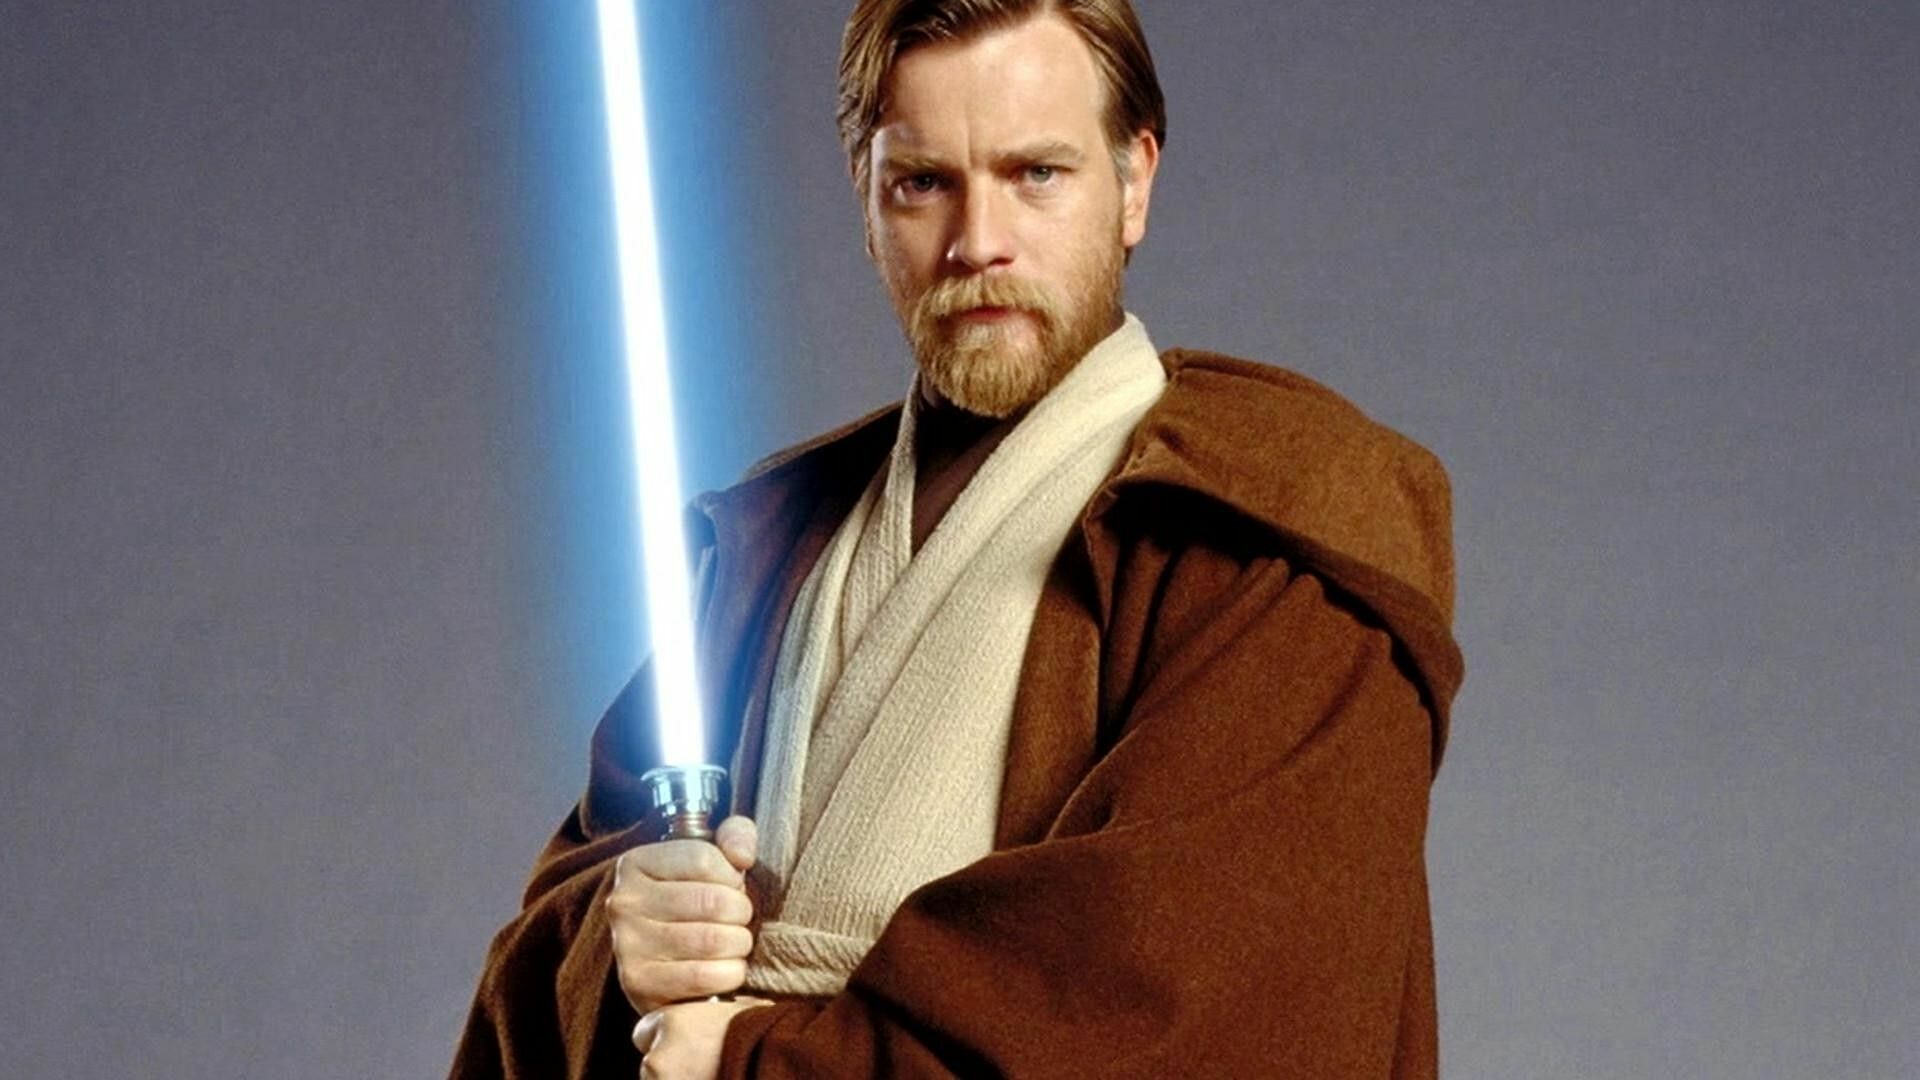 How To Make An Obi-Wan Cosplay To Prepare For The Kenobi Series